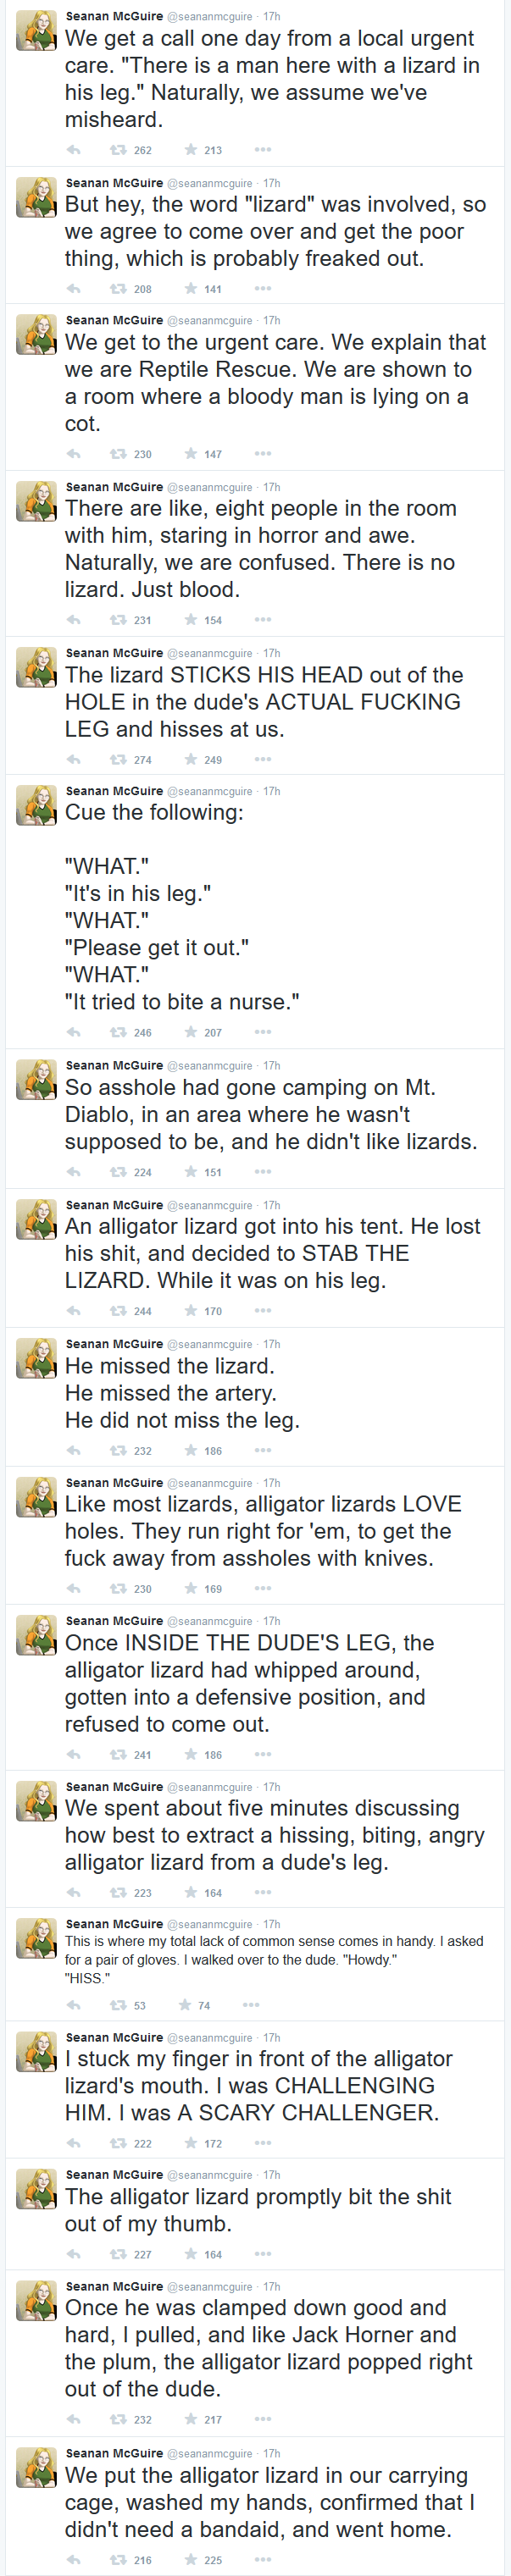 random pic alligator lizard story